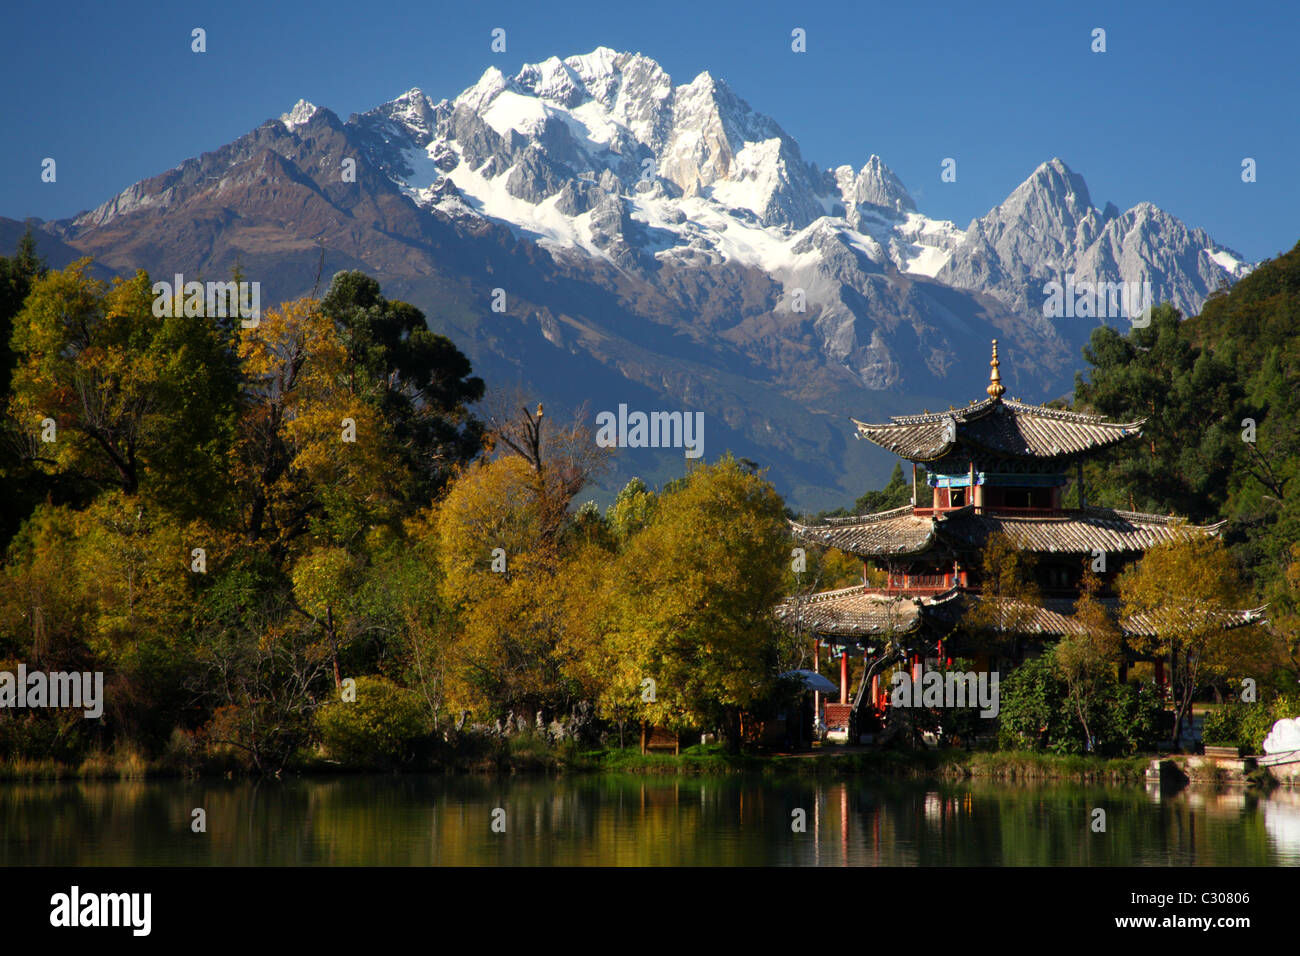 Imressions of Lijiang,UNESCO world heritage city in China Stock Photo